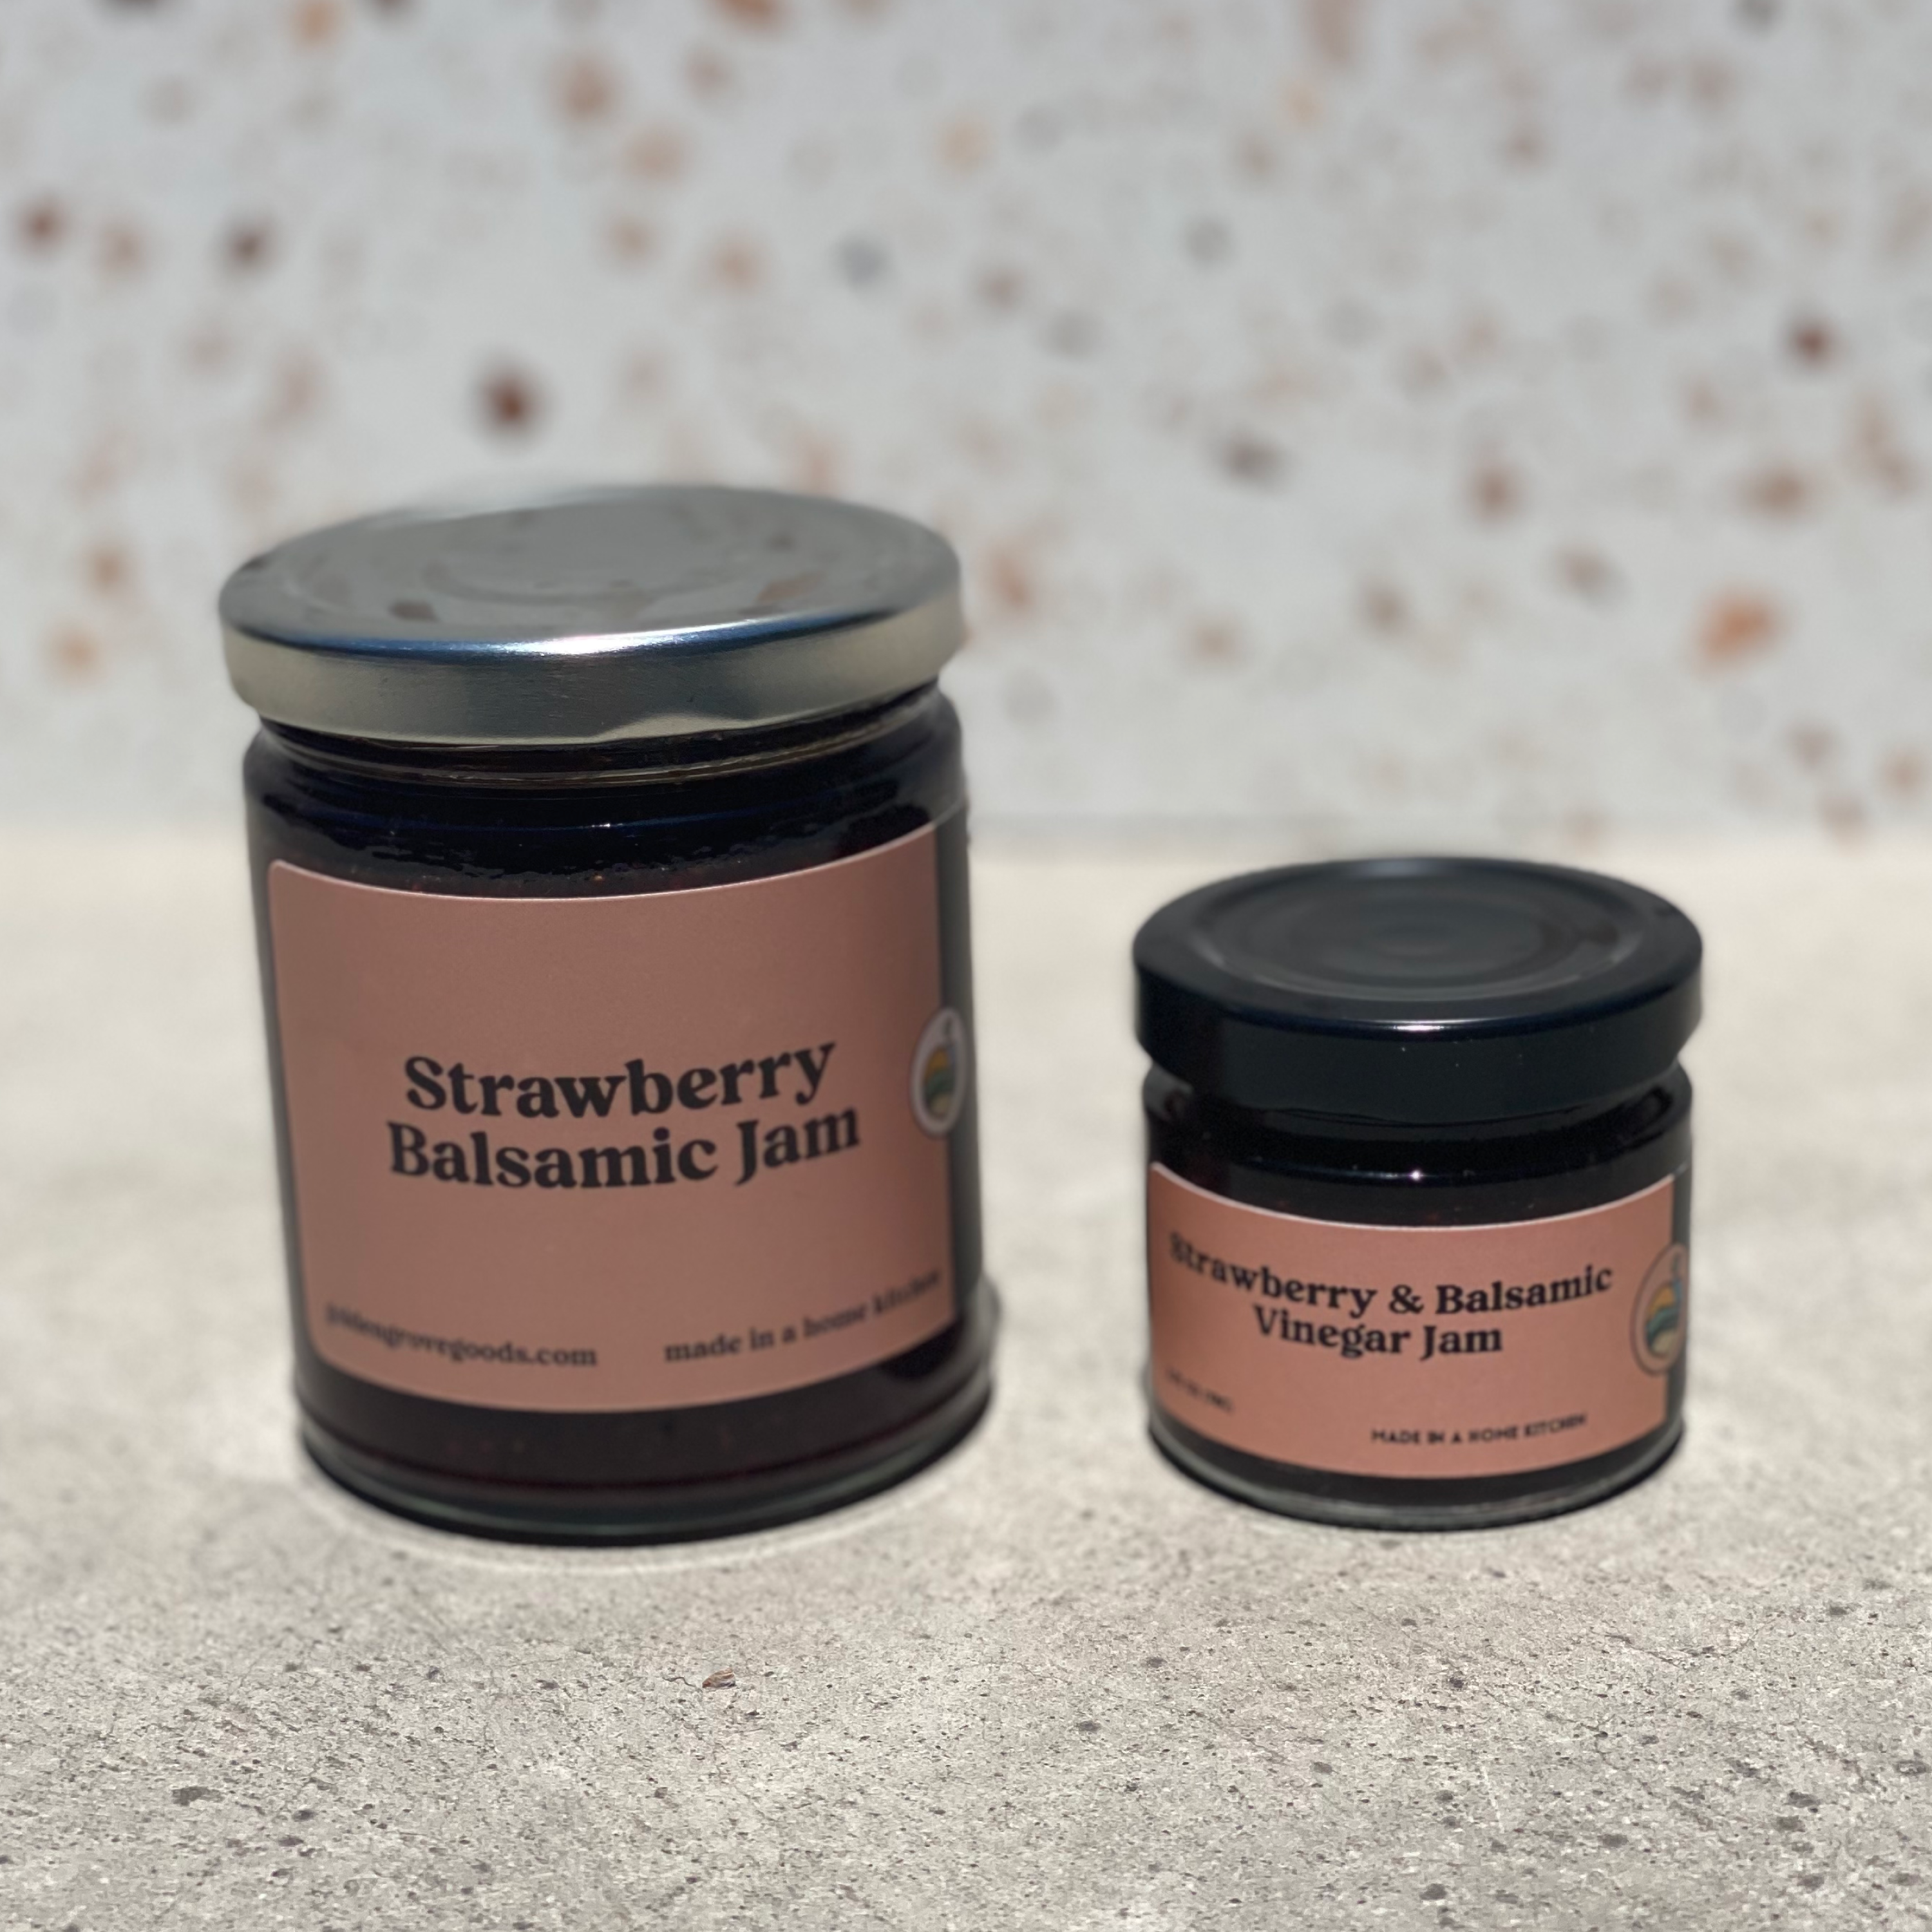 Strawberry and Balsamic Vinegar Jam